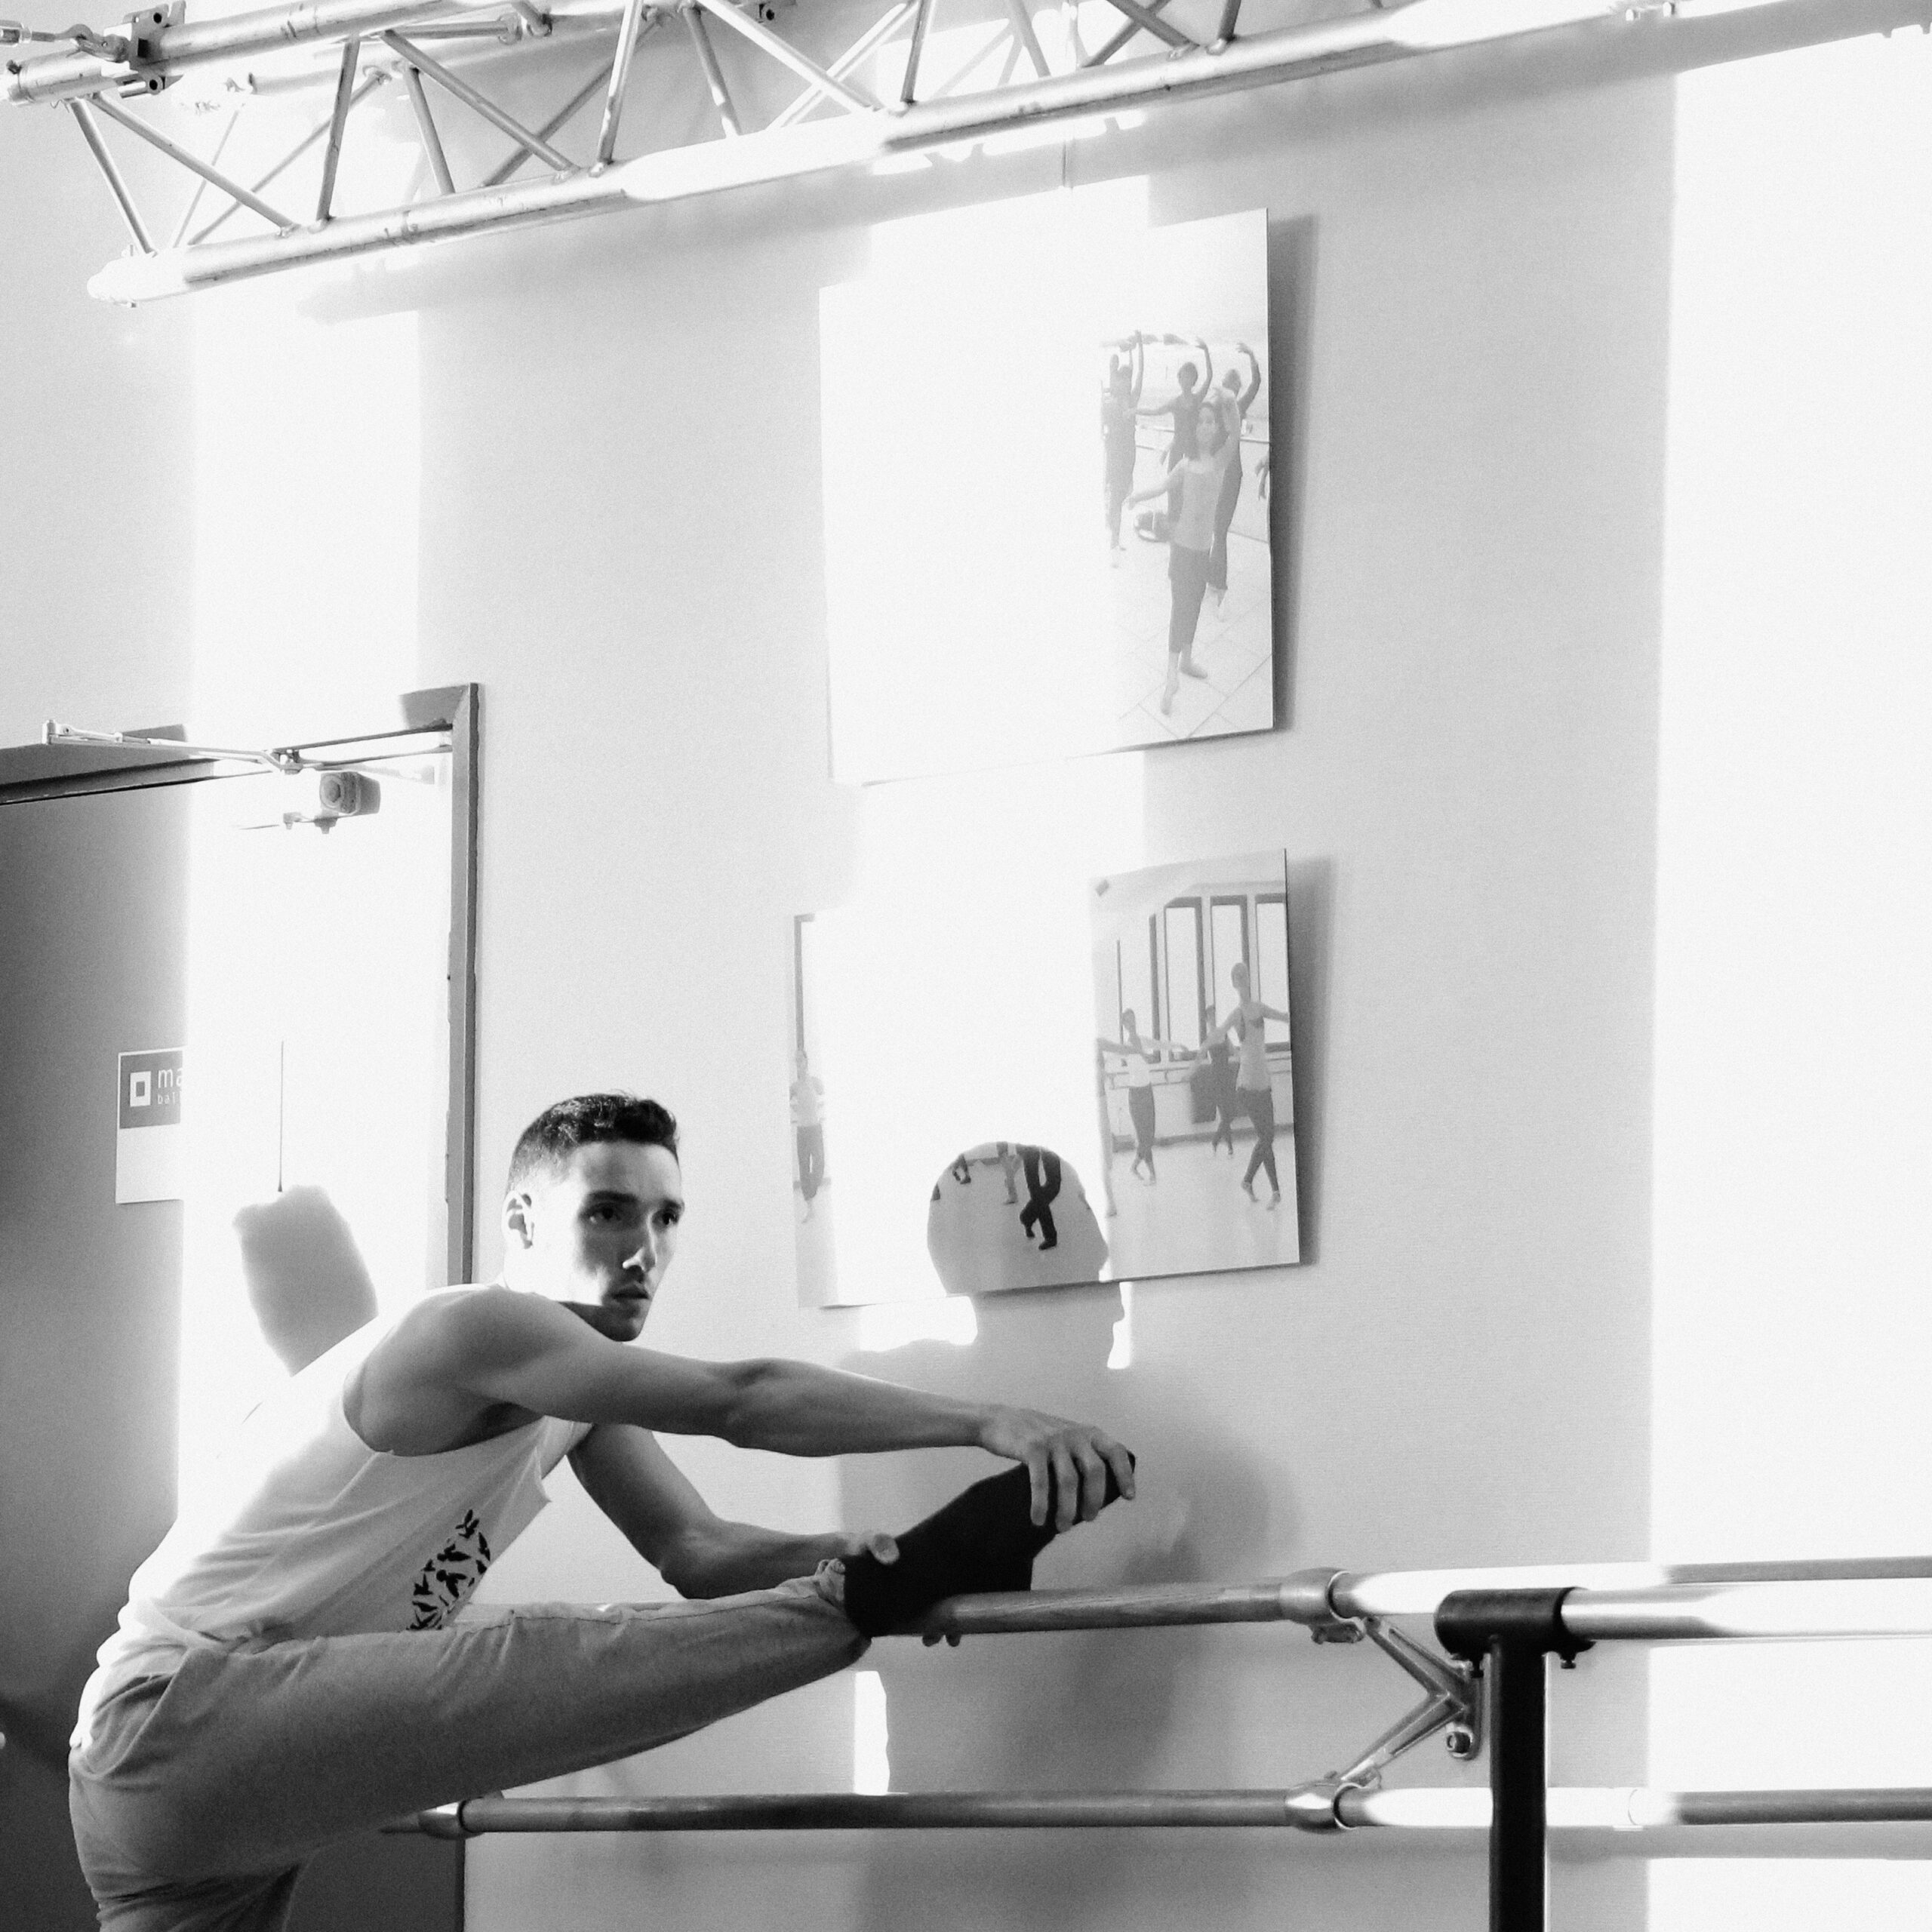 photo dance ballet